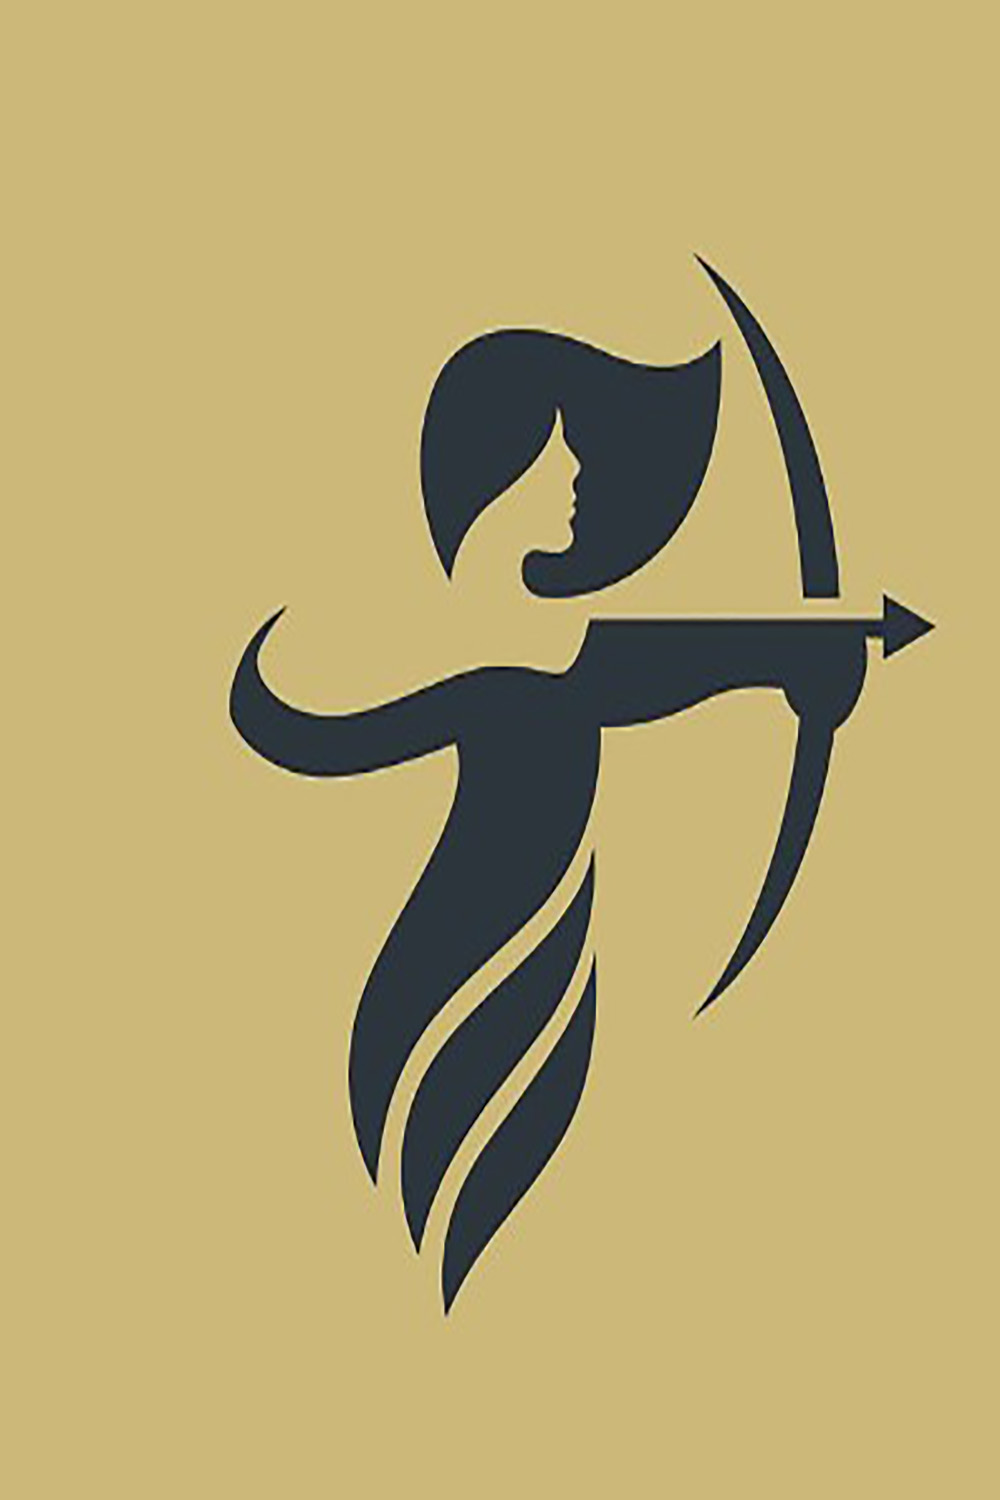 Pictorialmark logo design pinterest preview image.